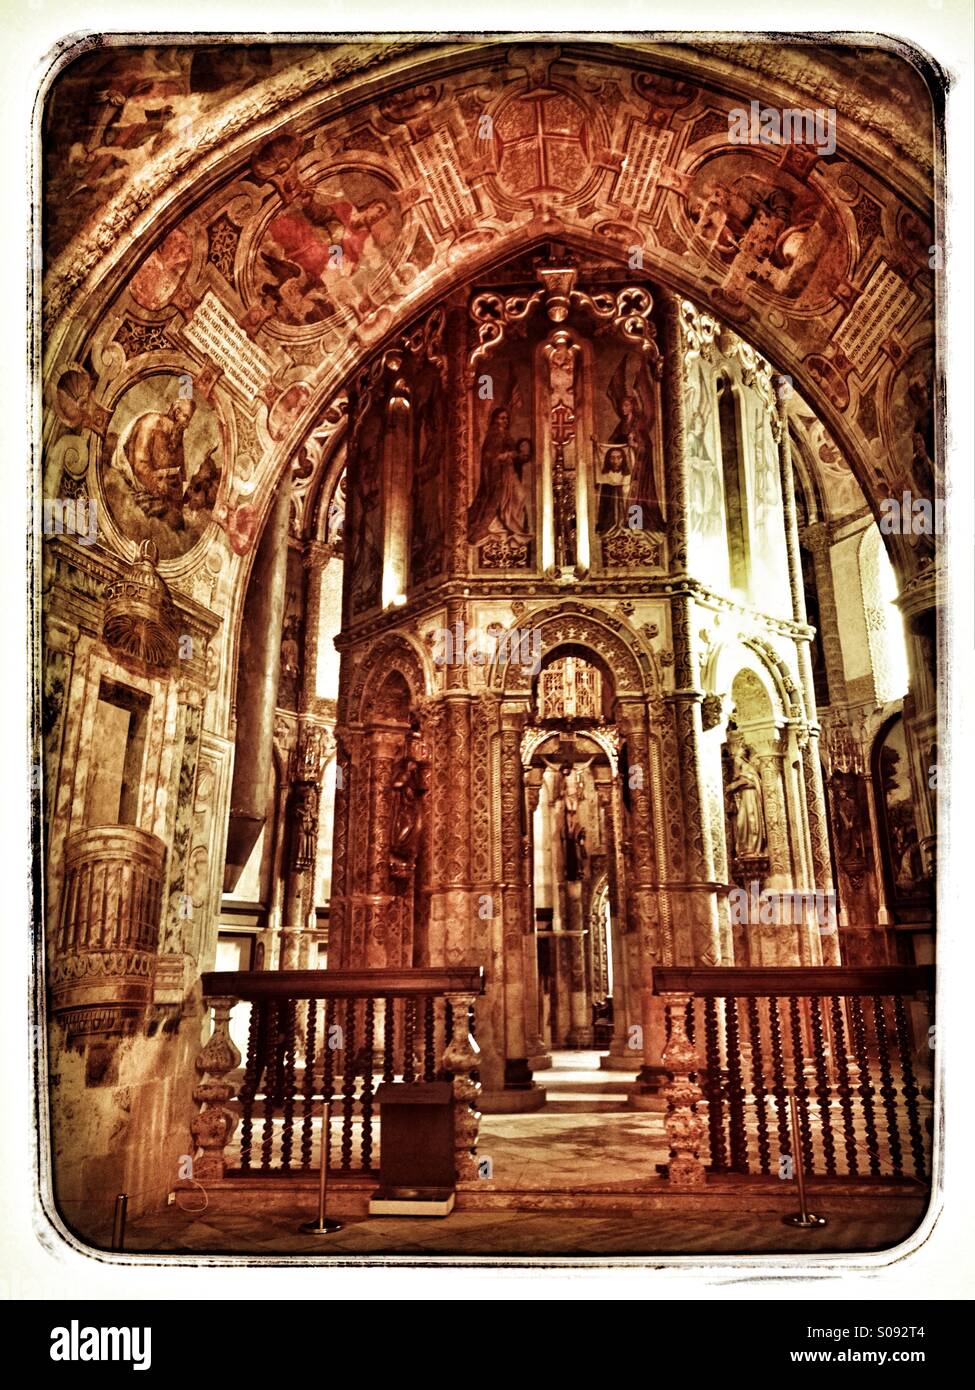 Convento do cristo Tomar Portugal Stock Photo